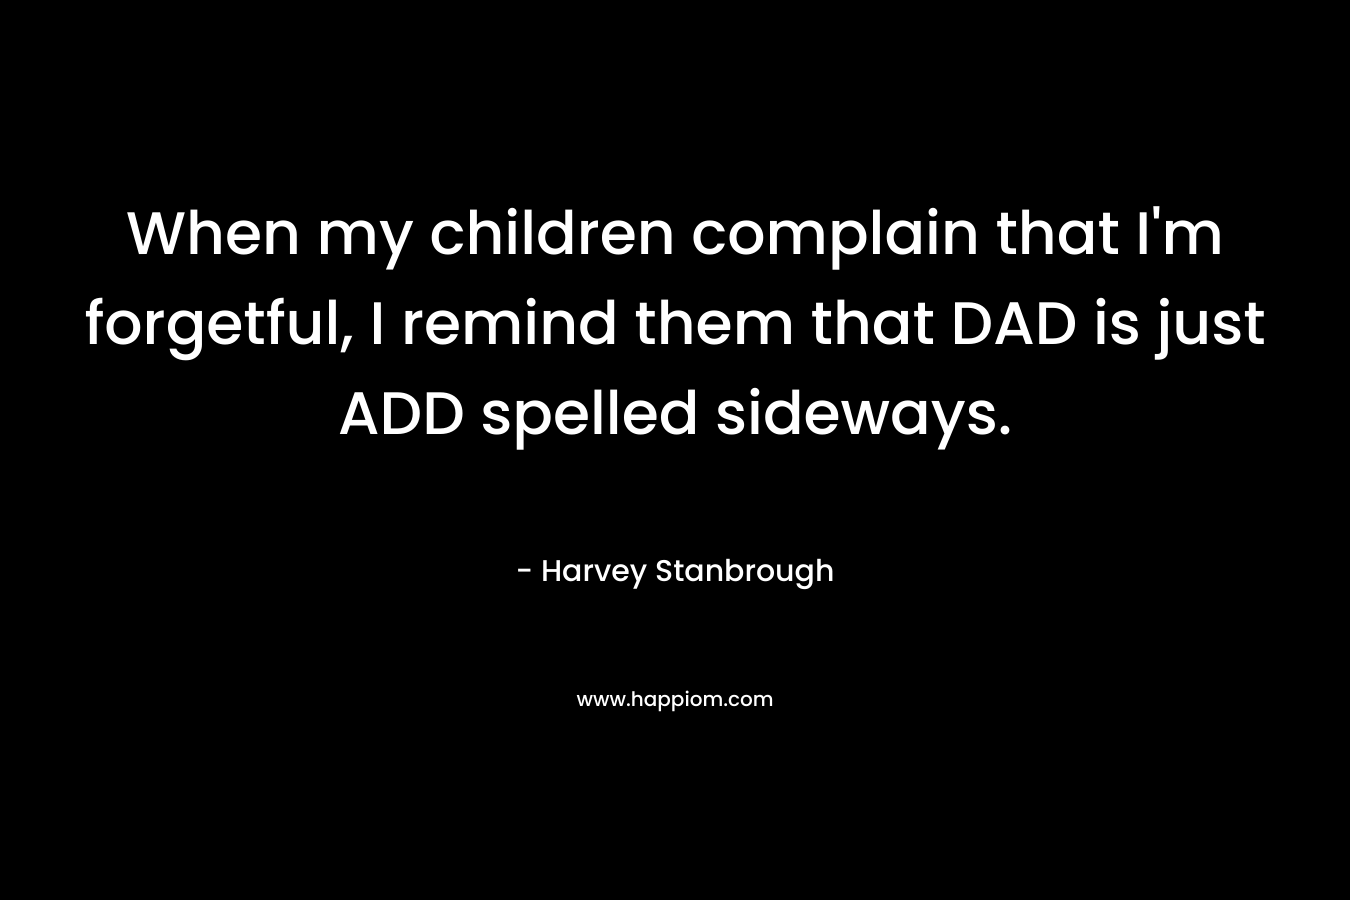 When my children complain that I'm forgetful, I remind them that DAD is just ADD spelled sideways.